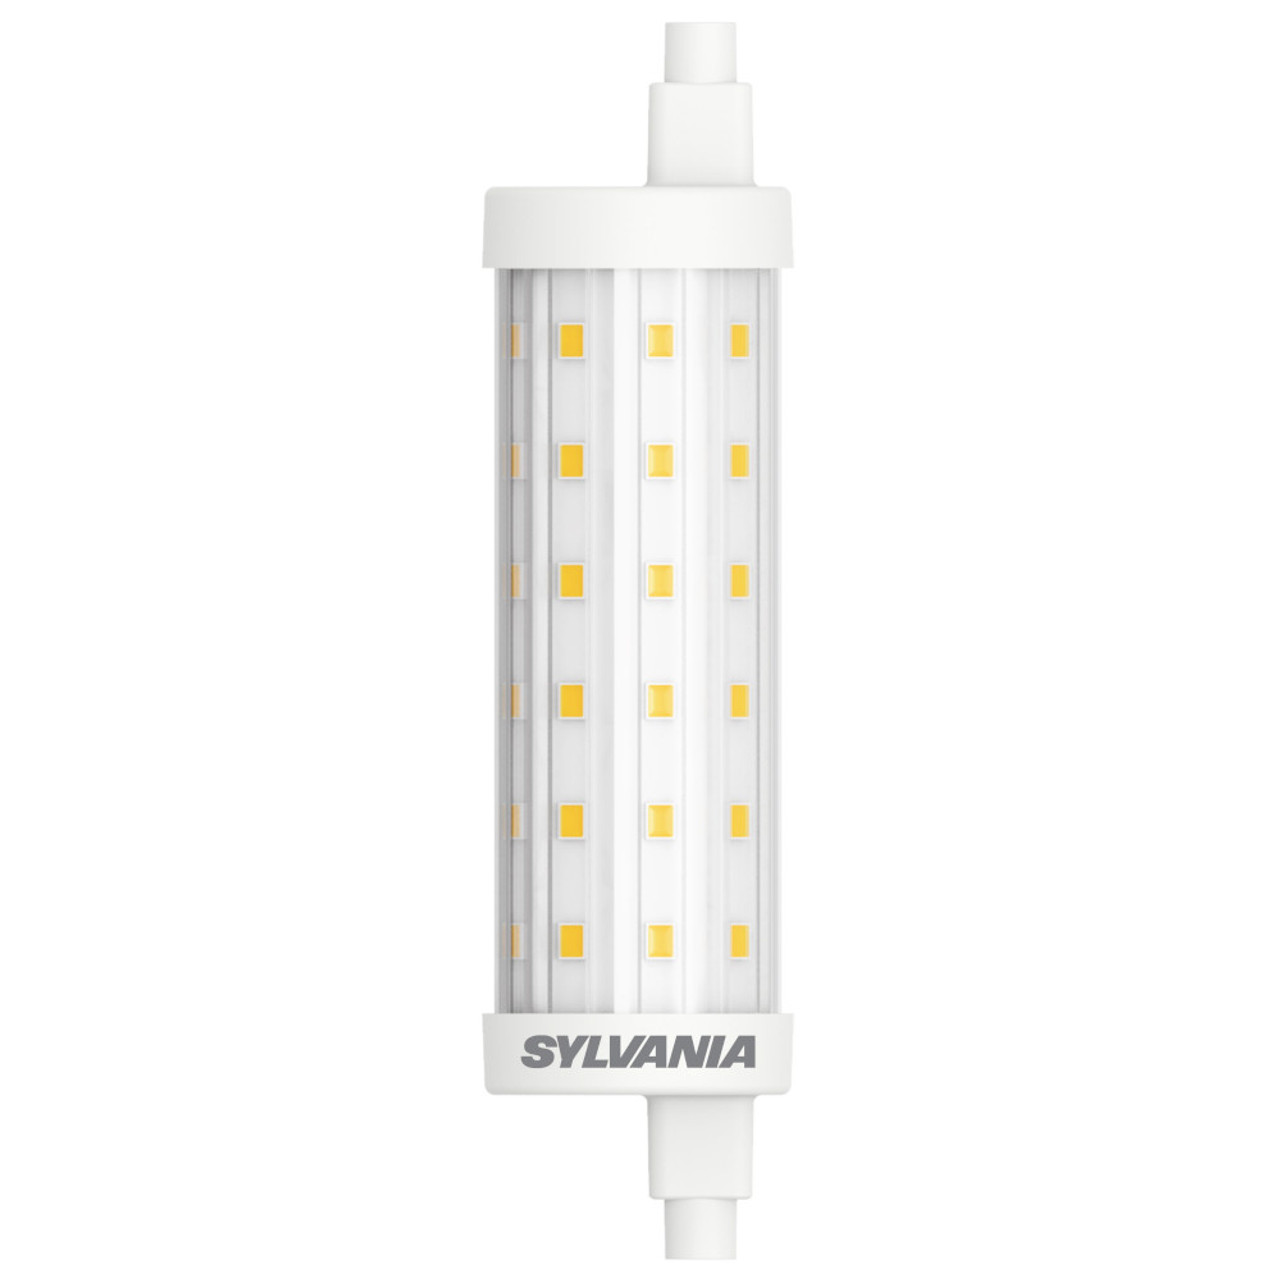 Sylvania LED R7s 11W (100W eq.) 827 Very Warm White 118mm